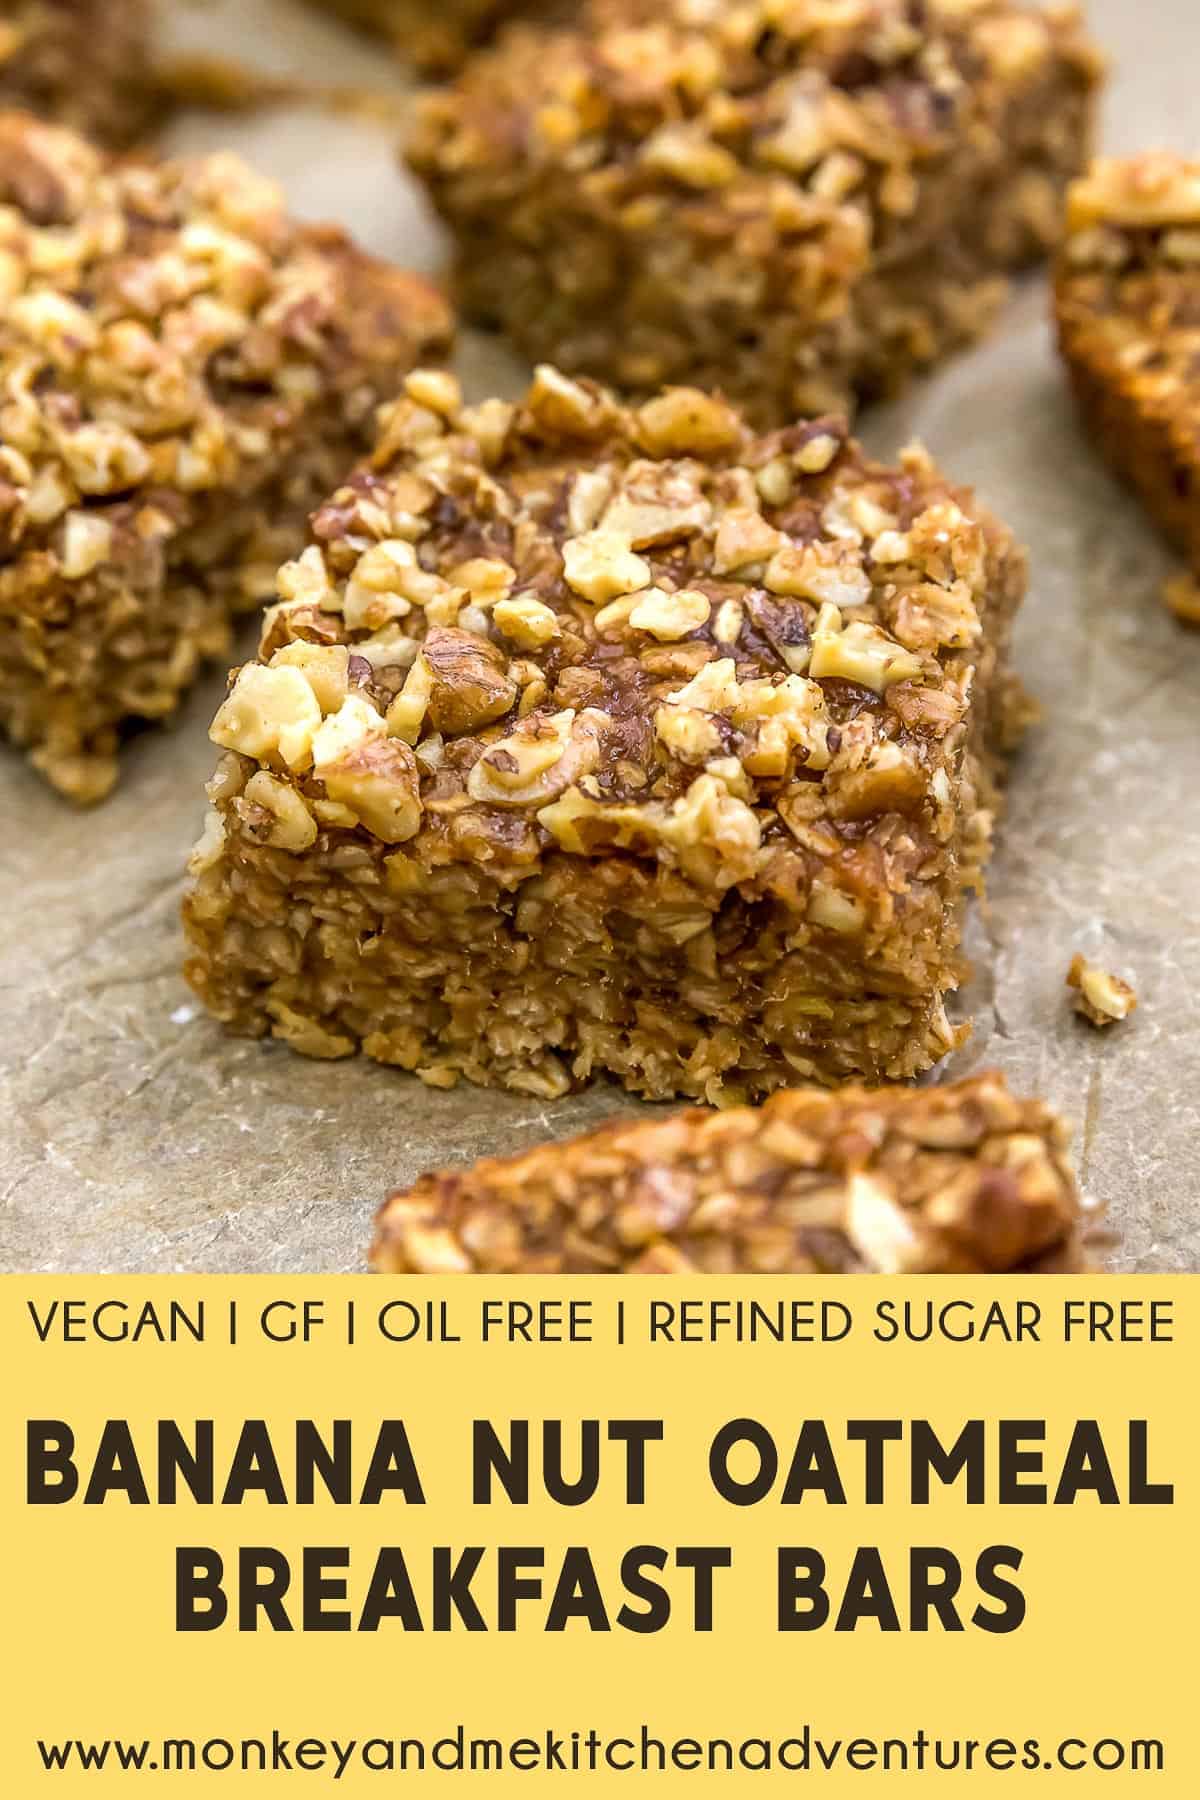 Banana Nut Oatmeal Breakfast Bars with Text Description